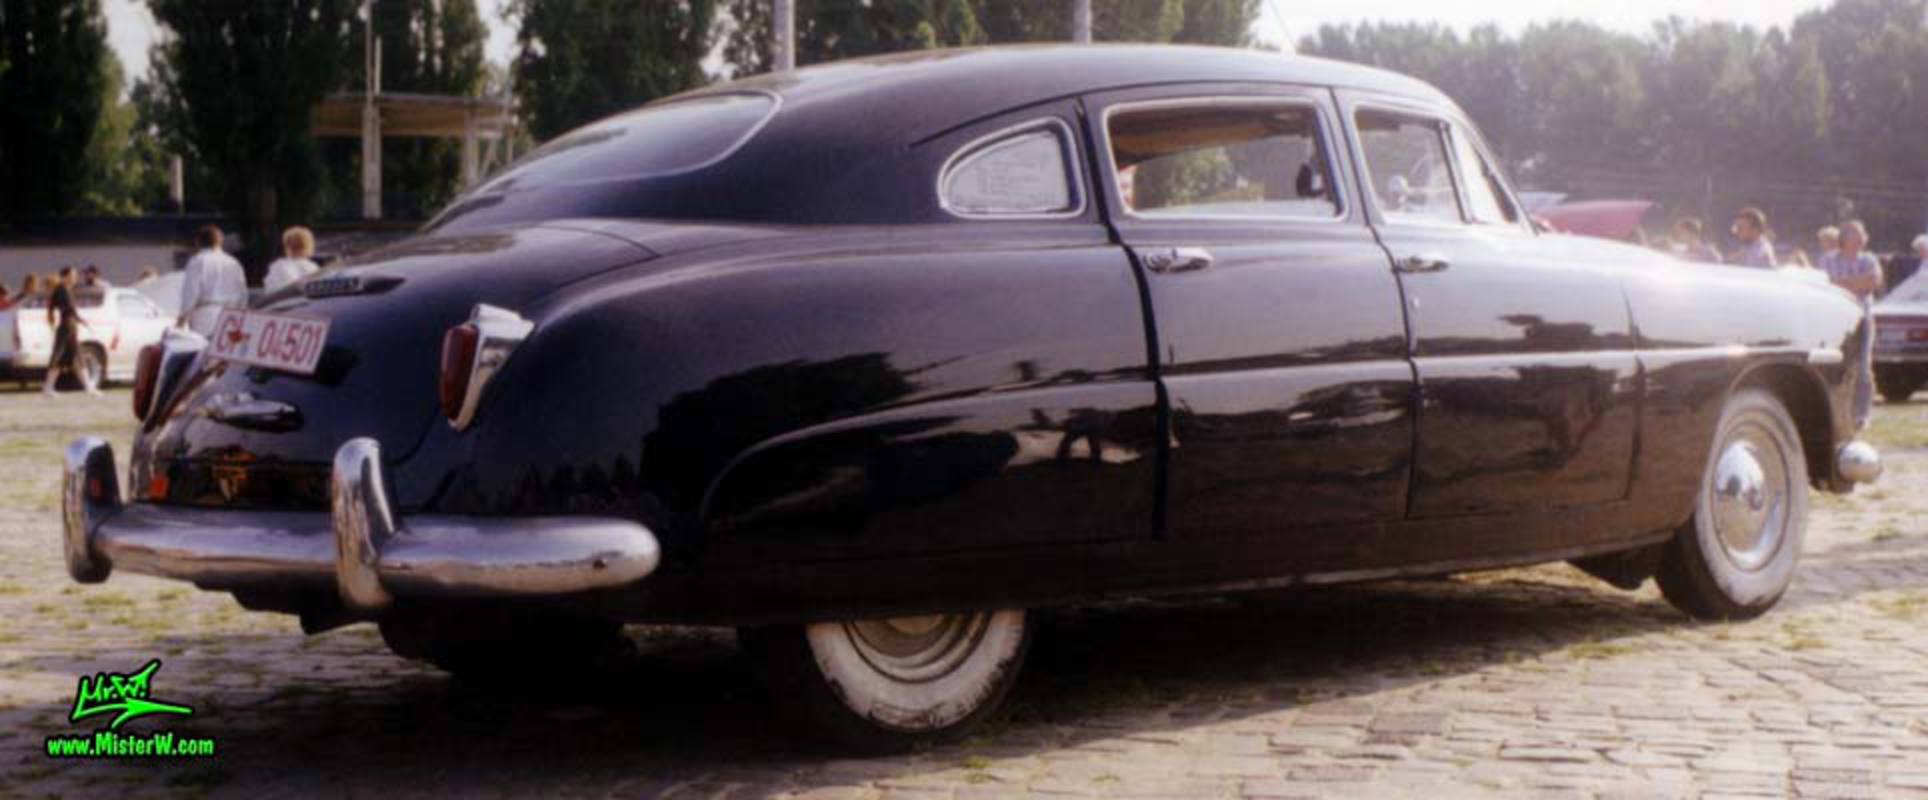 1948 Hudson Sedan Rearview | 1948 Hudson 4 Door Sedan | Classic ...